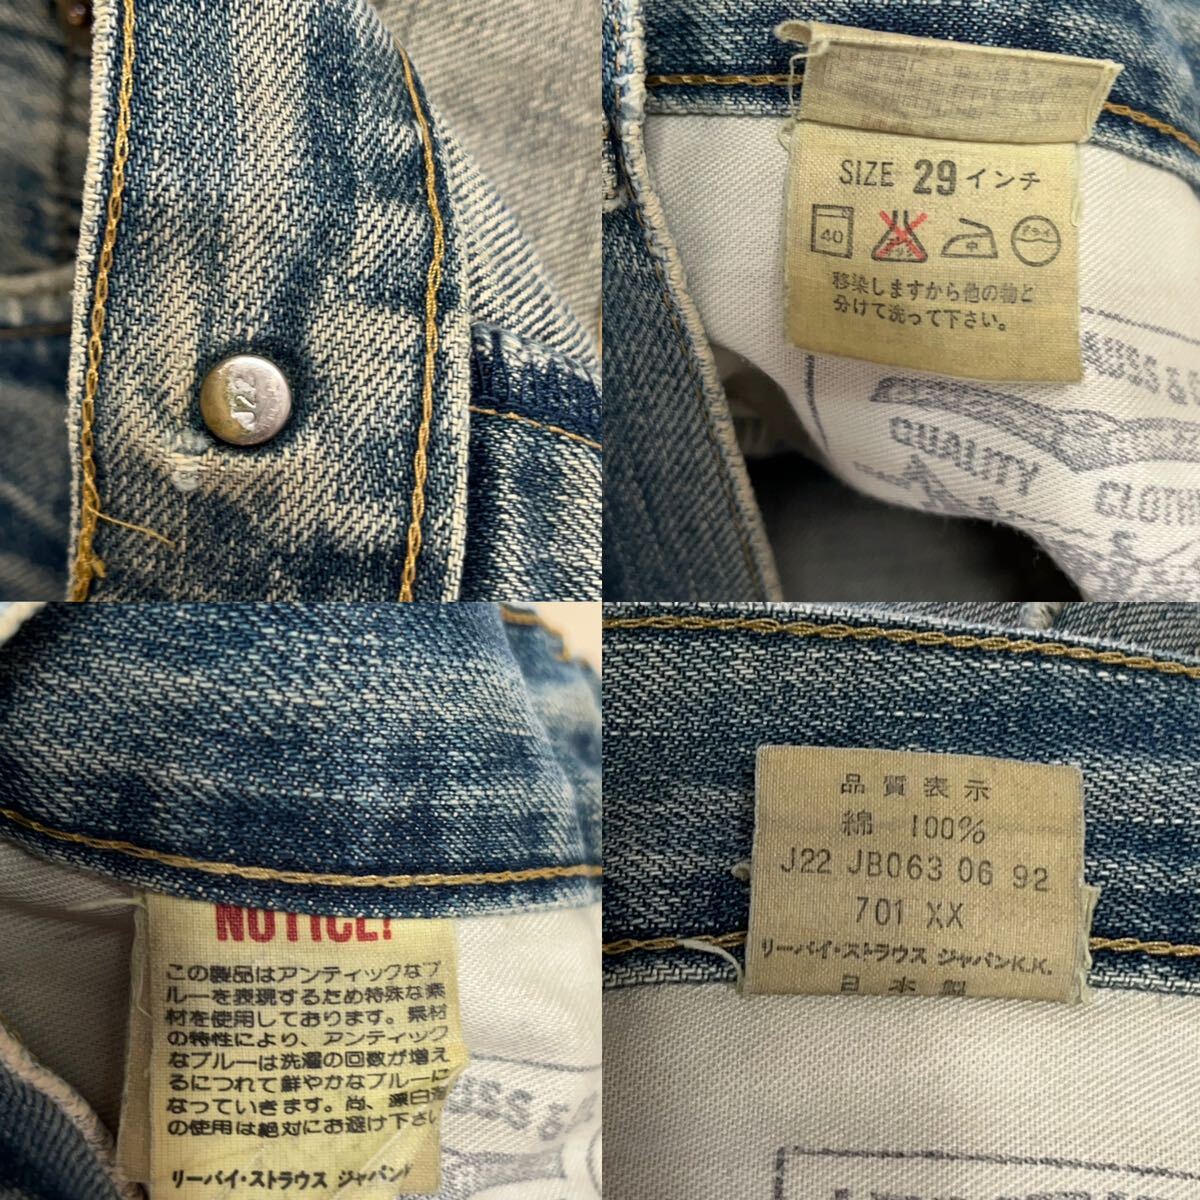 F3 Levi's 701XX w29 б/у одежда сделано в Японии sinchi задний кнопка fly Bick E джинсы Denim брюки Levis J22 мужской 